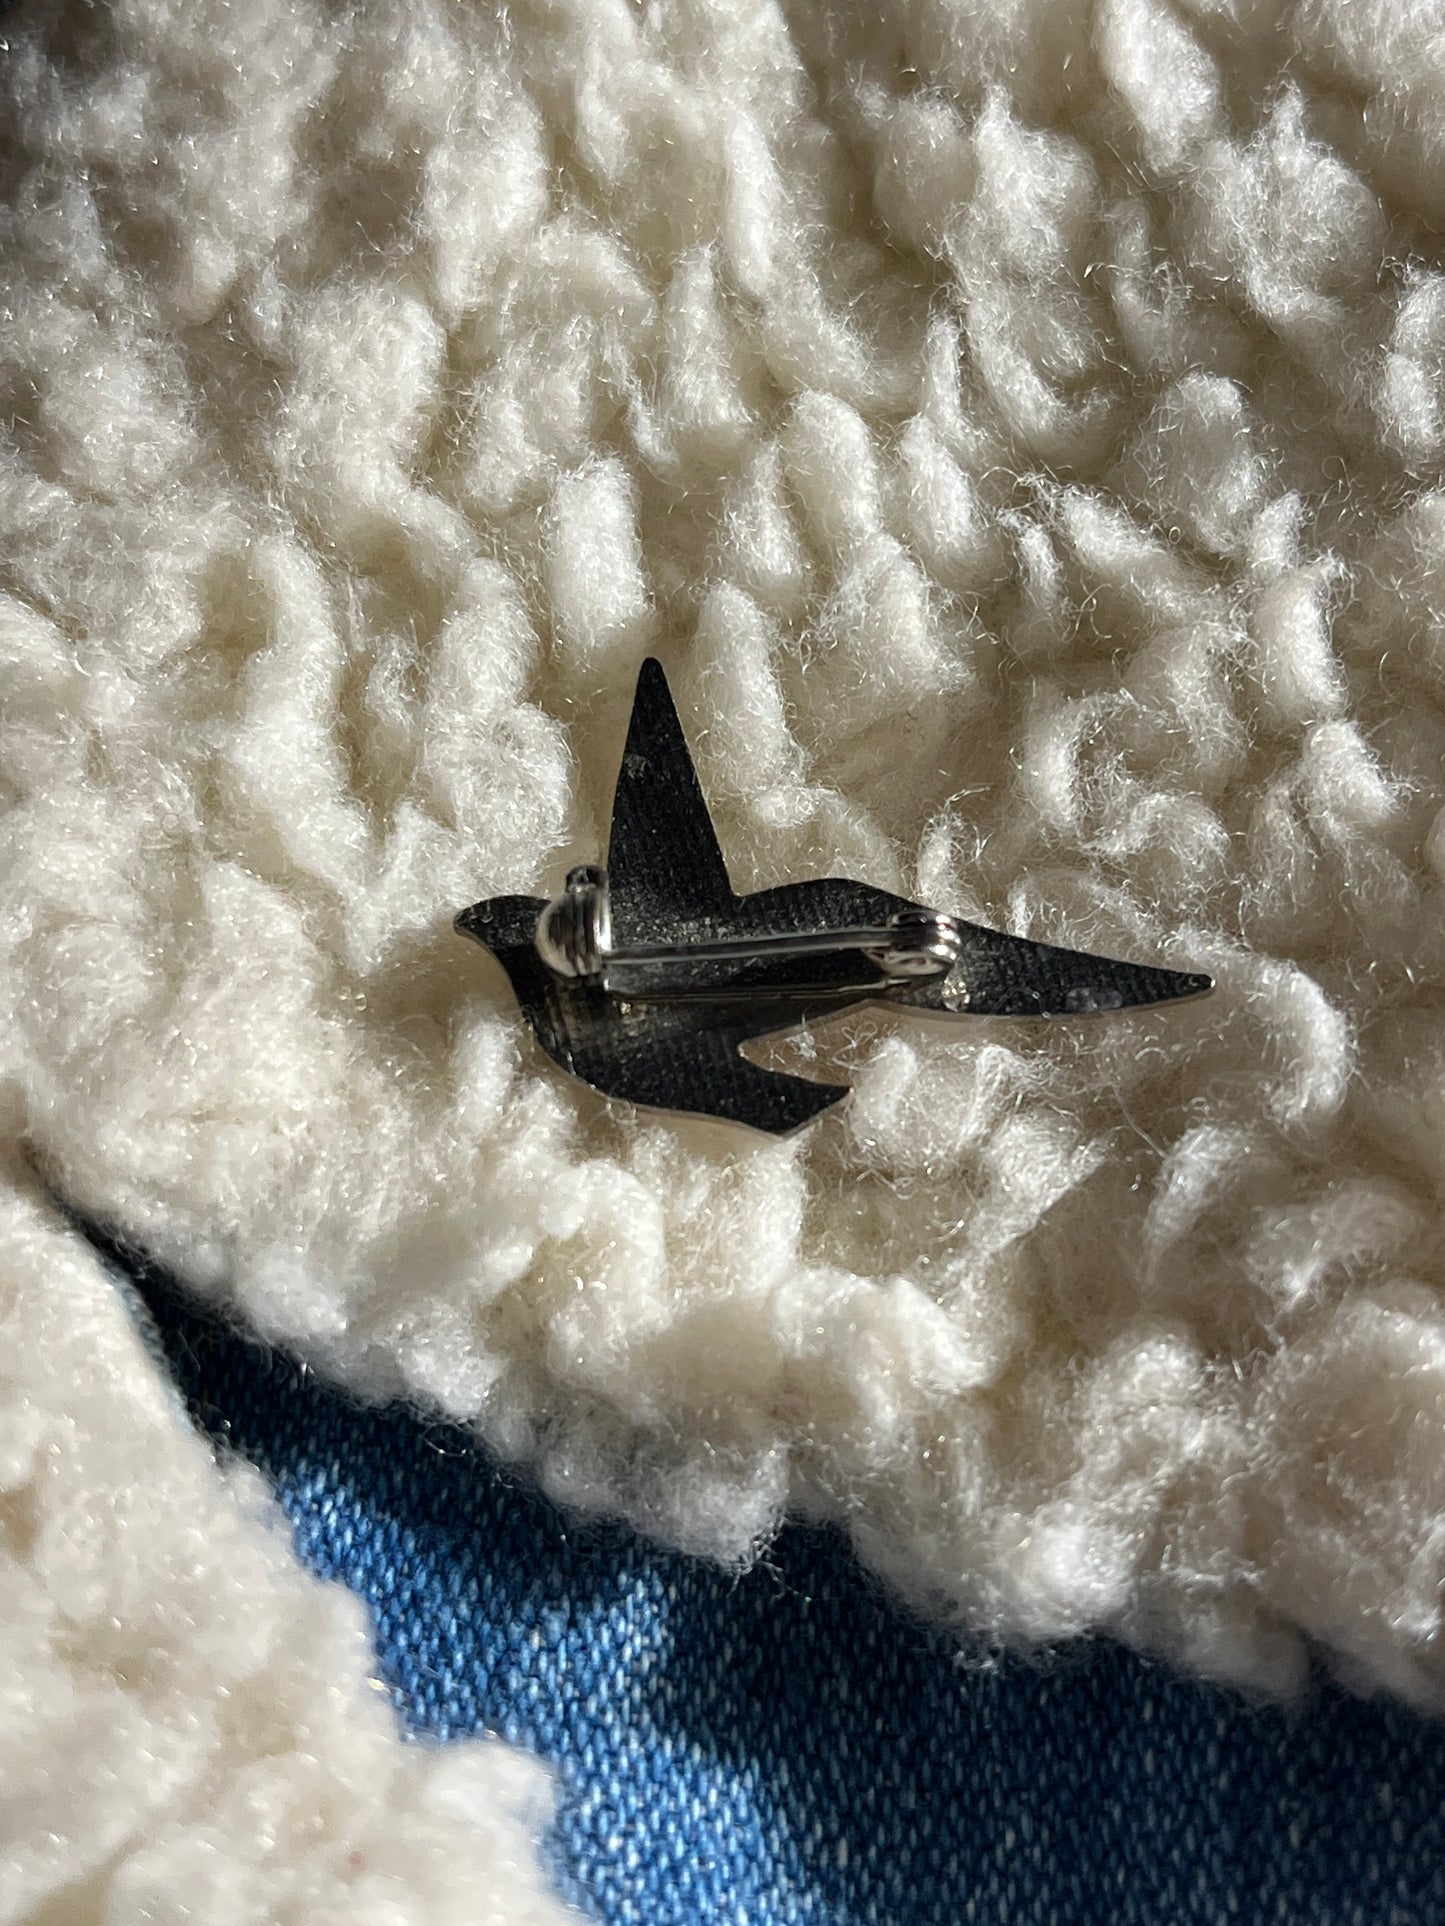 Vintage Bird Pin Metal Flying Silhouette